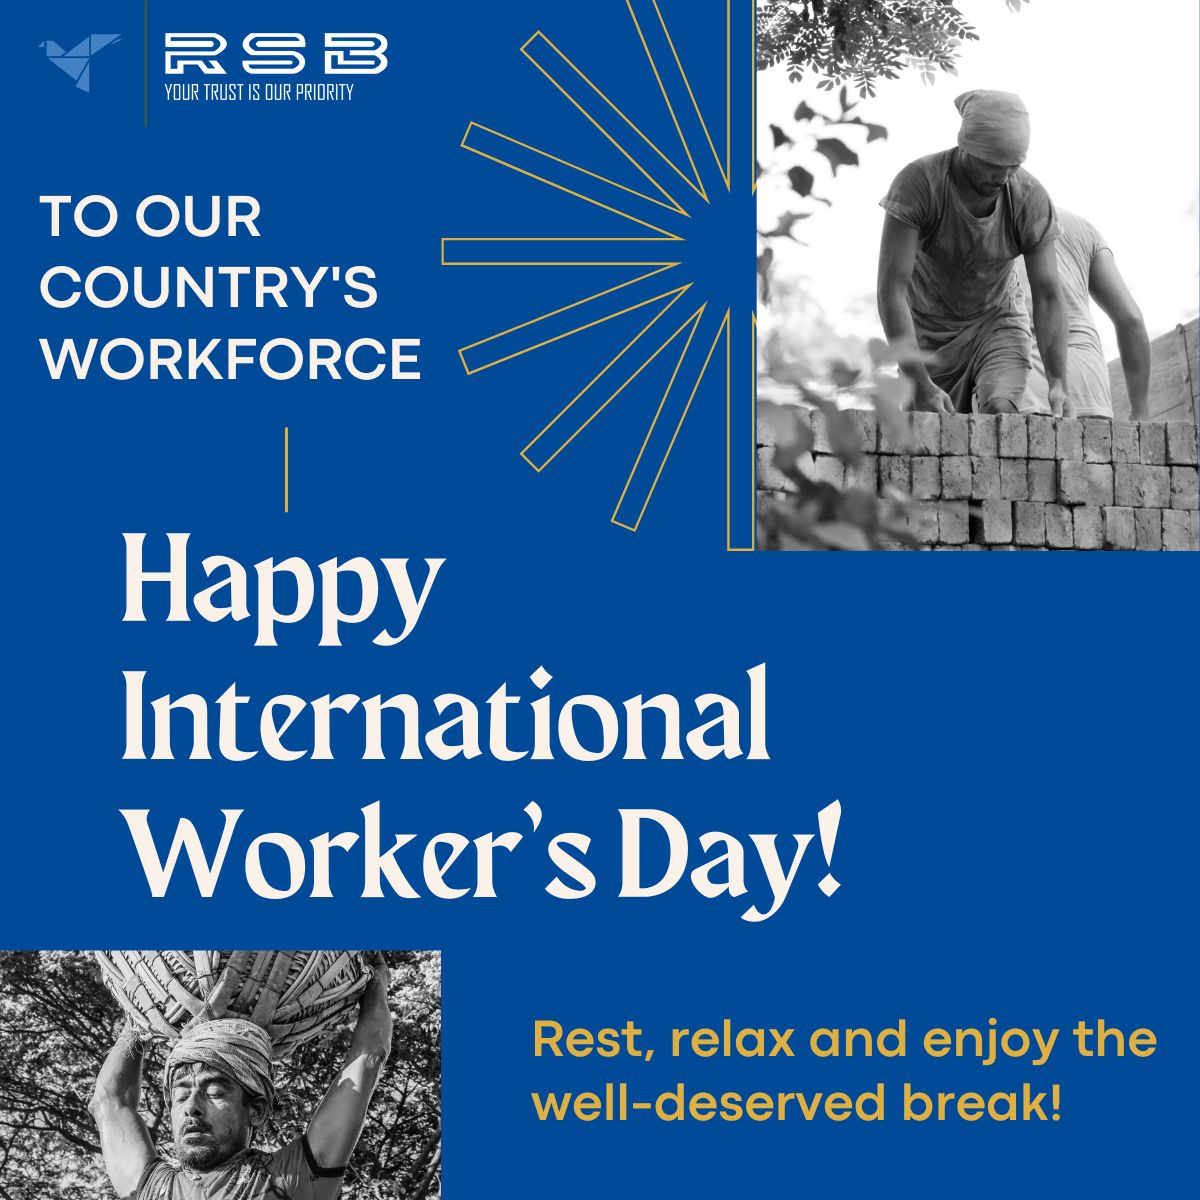 #InternationalWorkersDay #WorkforceAppreciation #Dedication #HardWorkPaysOff #EmployeeRecognition #LaborDay #RSBCommitment #TrustAndQuality #CelebratingWorkers #ThankYou